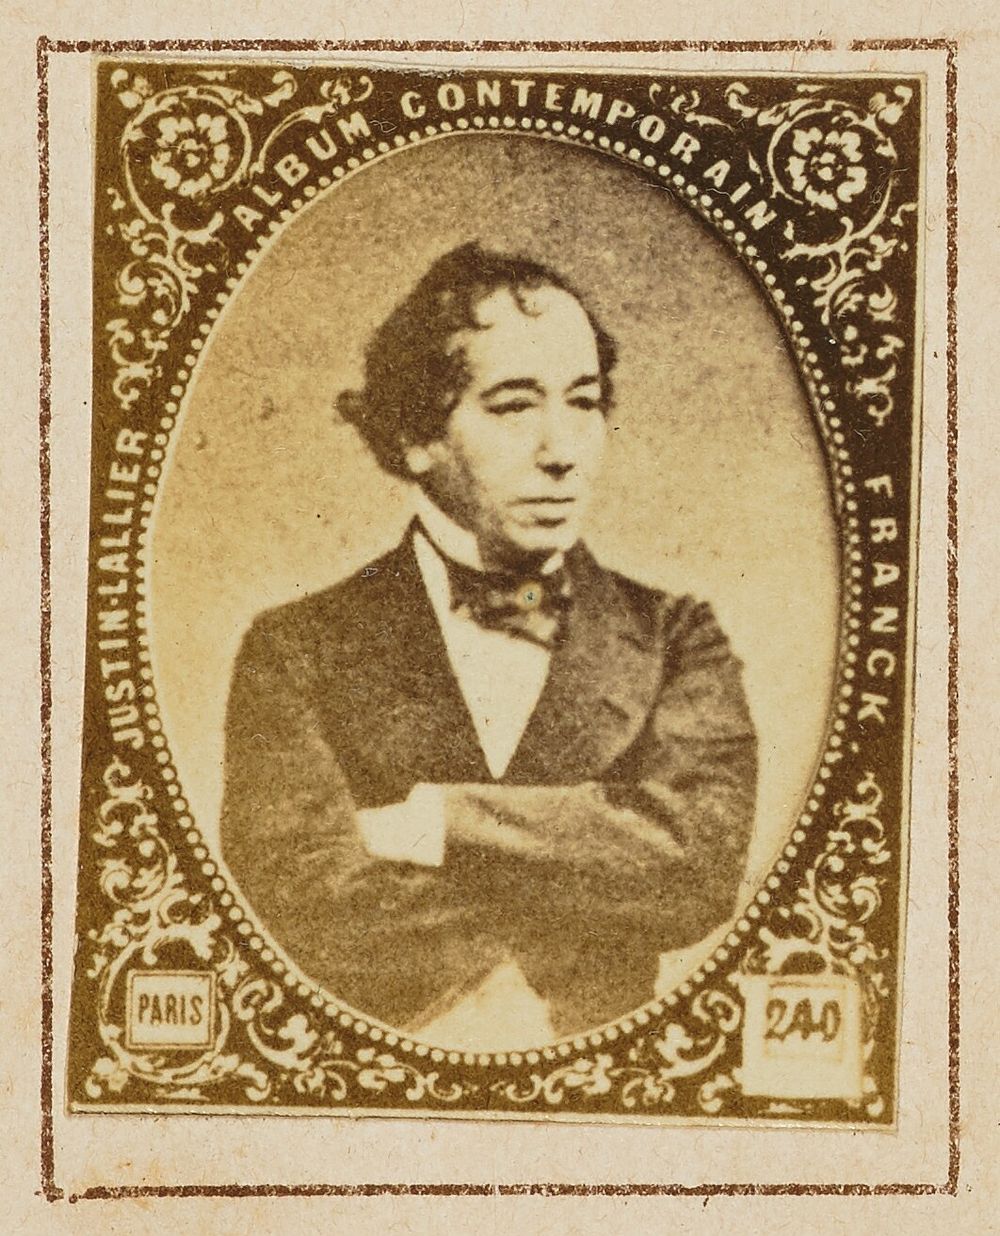 Benjamin Disraeli by Franck François Marie Louis Alexandre Gobinet de Villecholles and Justin Lallier